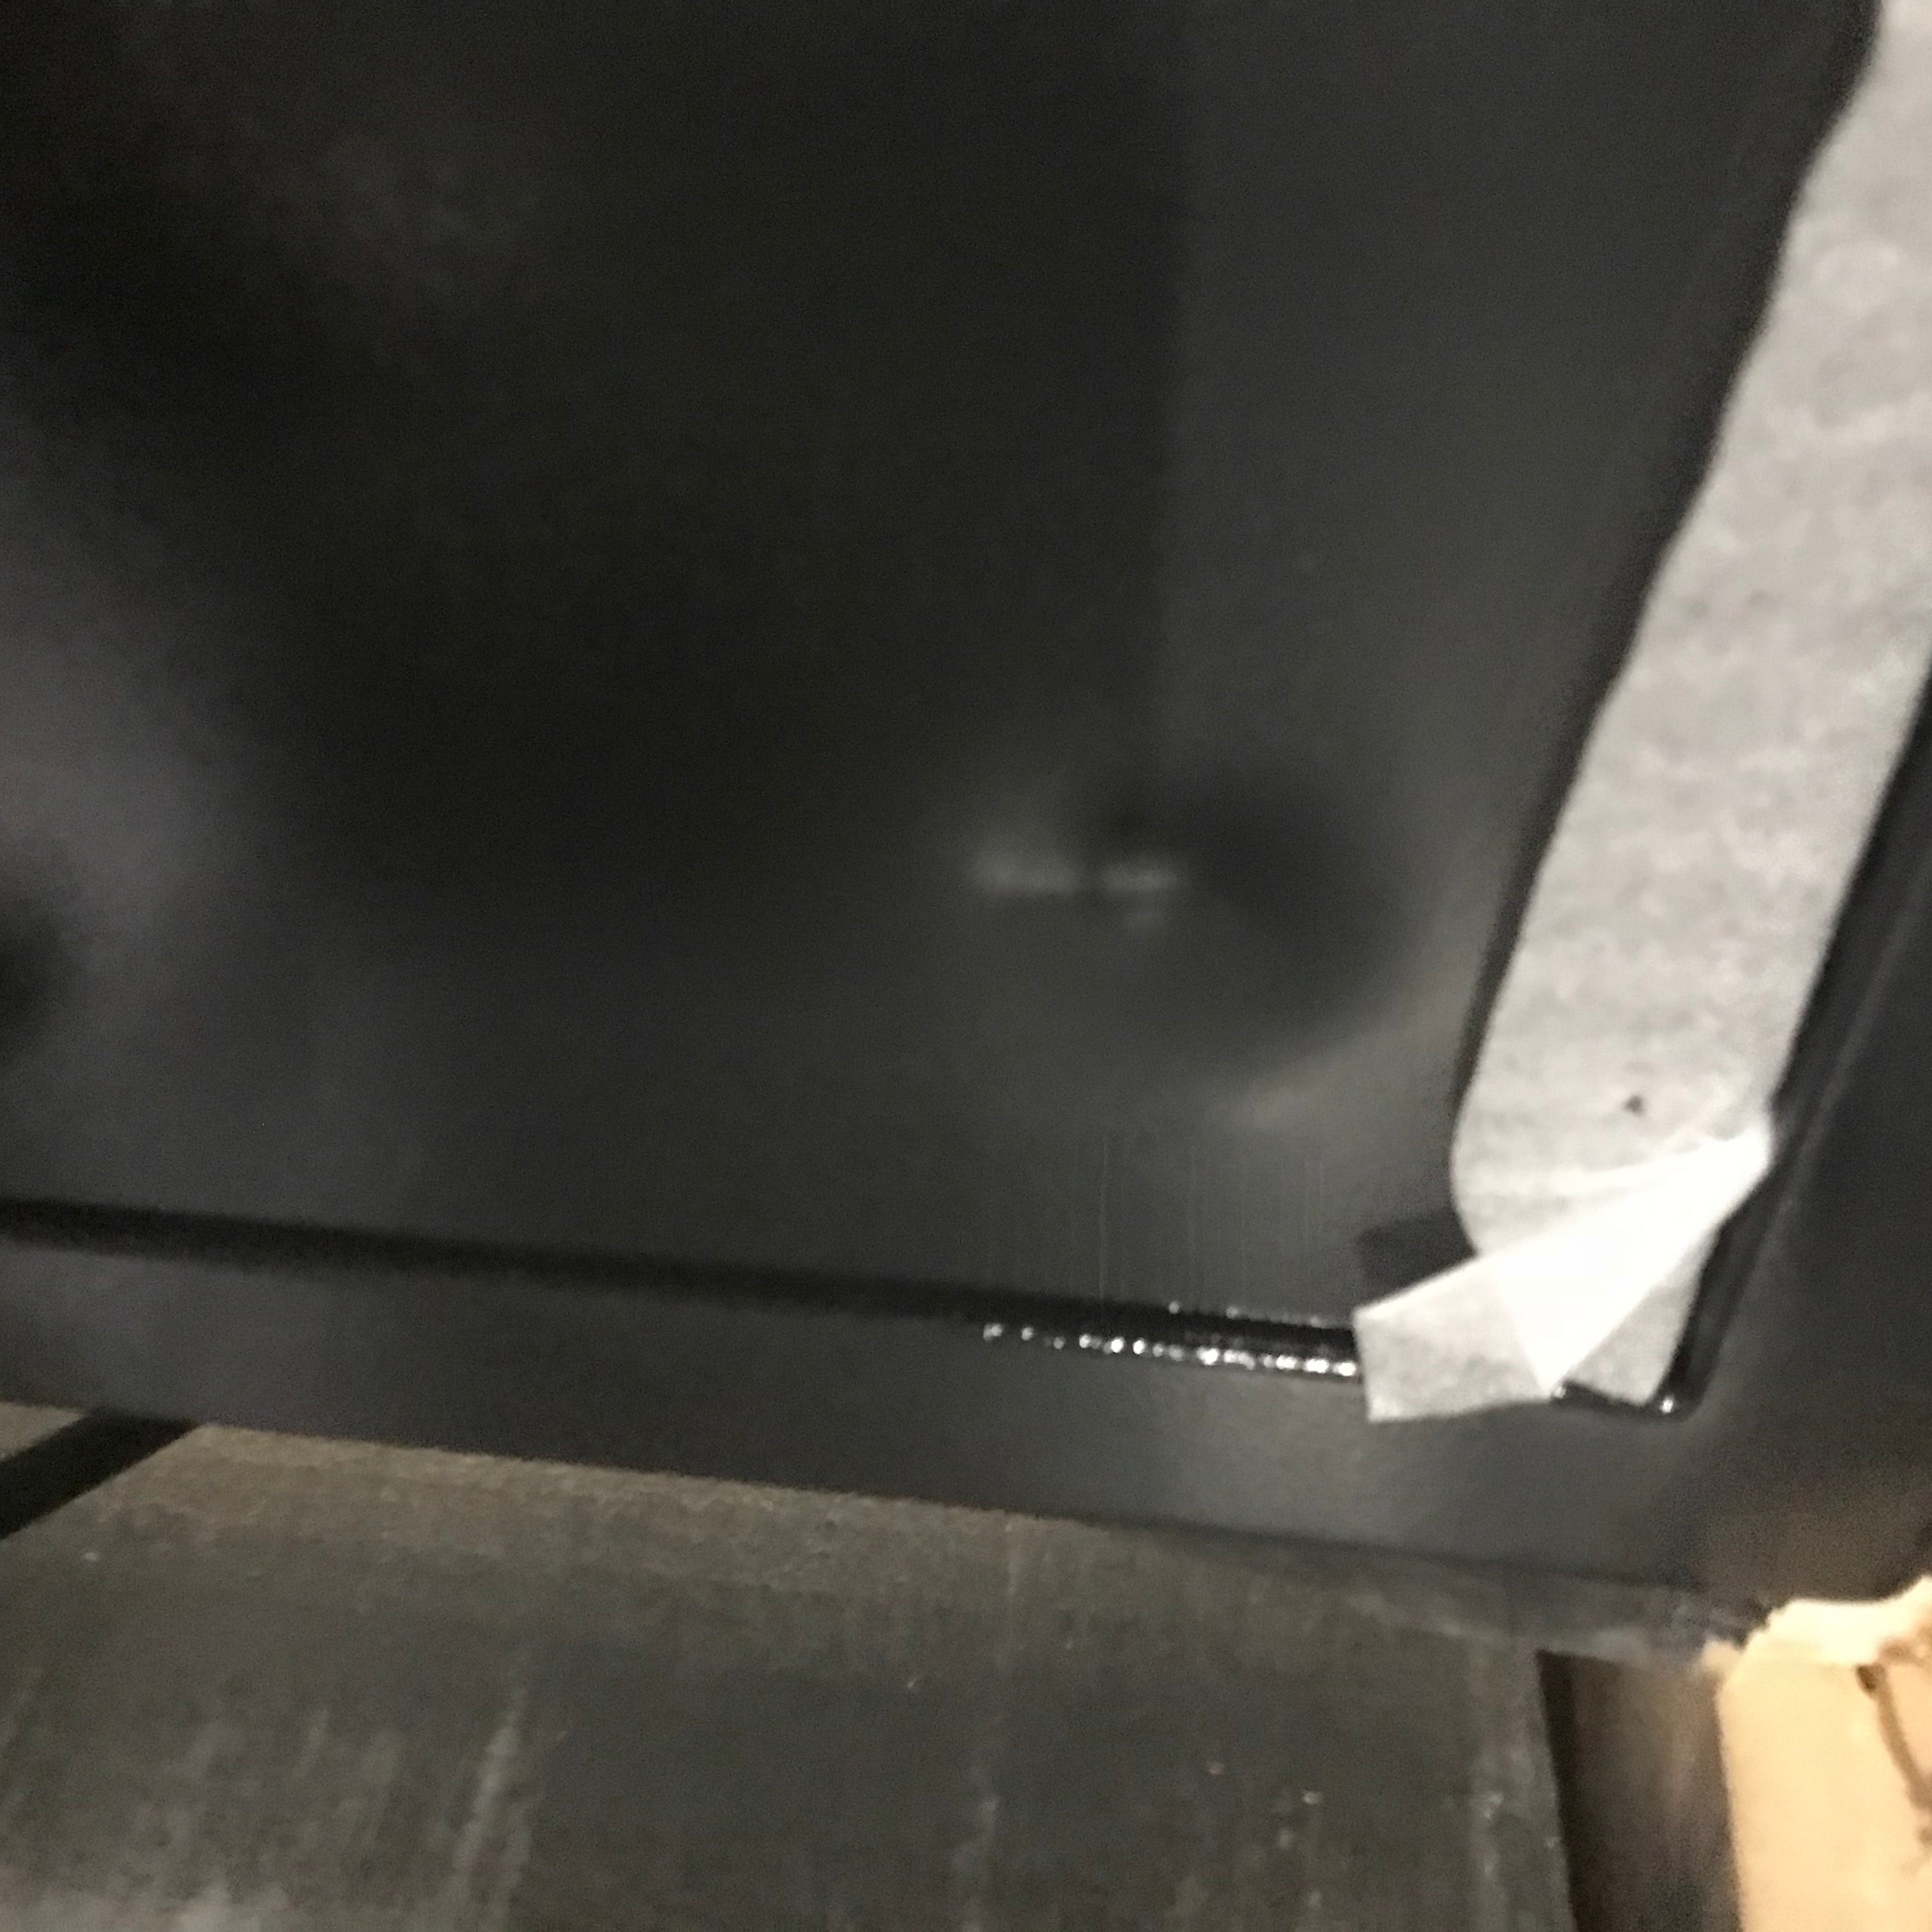 Small dent on bottom drawer